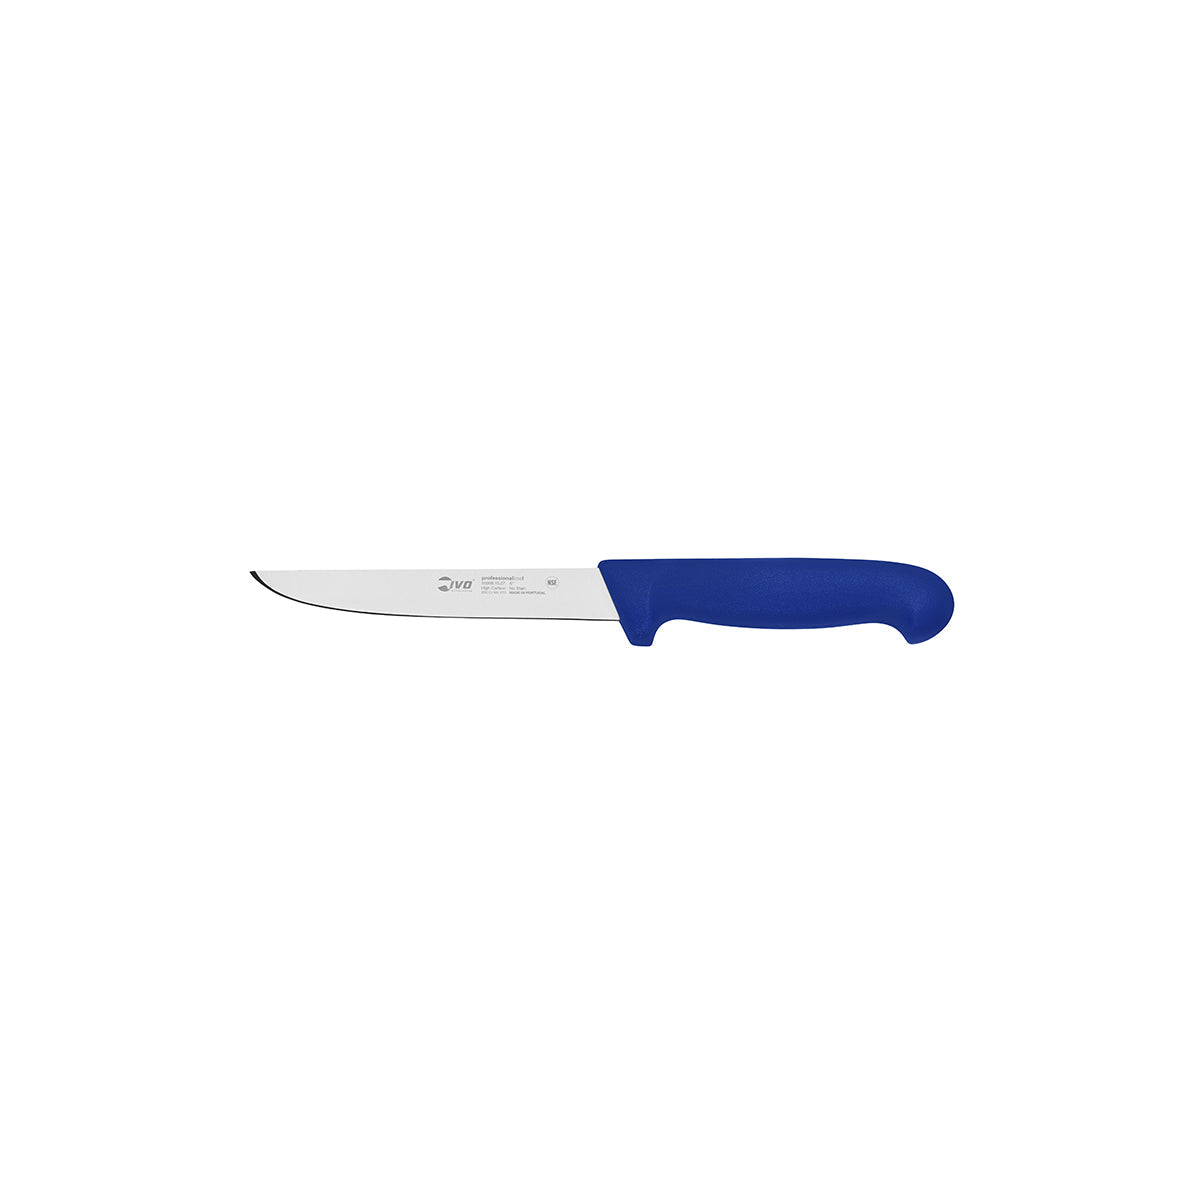 25407 Ivo Professional Line I Utility Knife Blue 150mm Tomkin Australia Hospitality Supplies